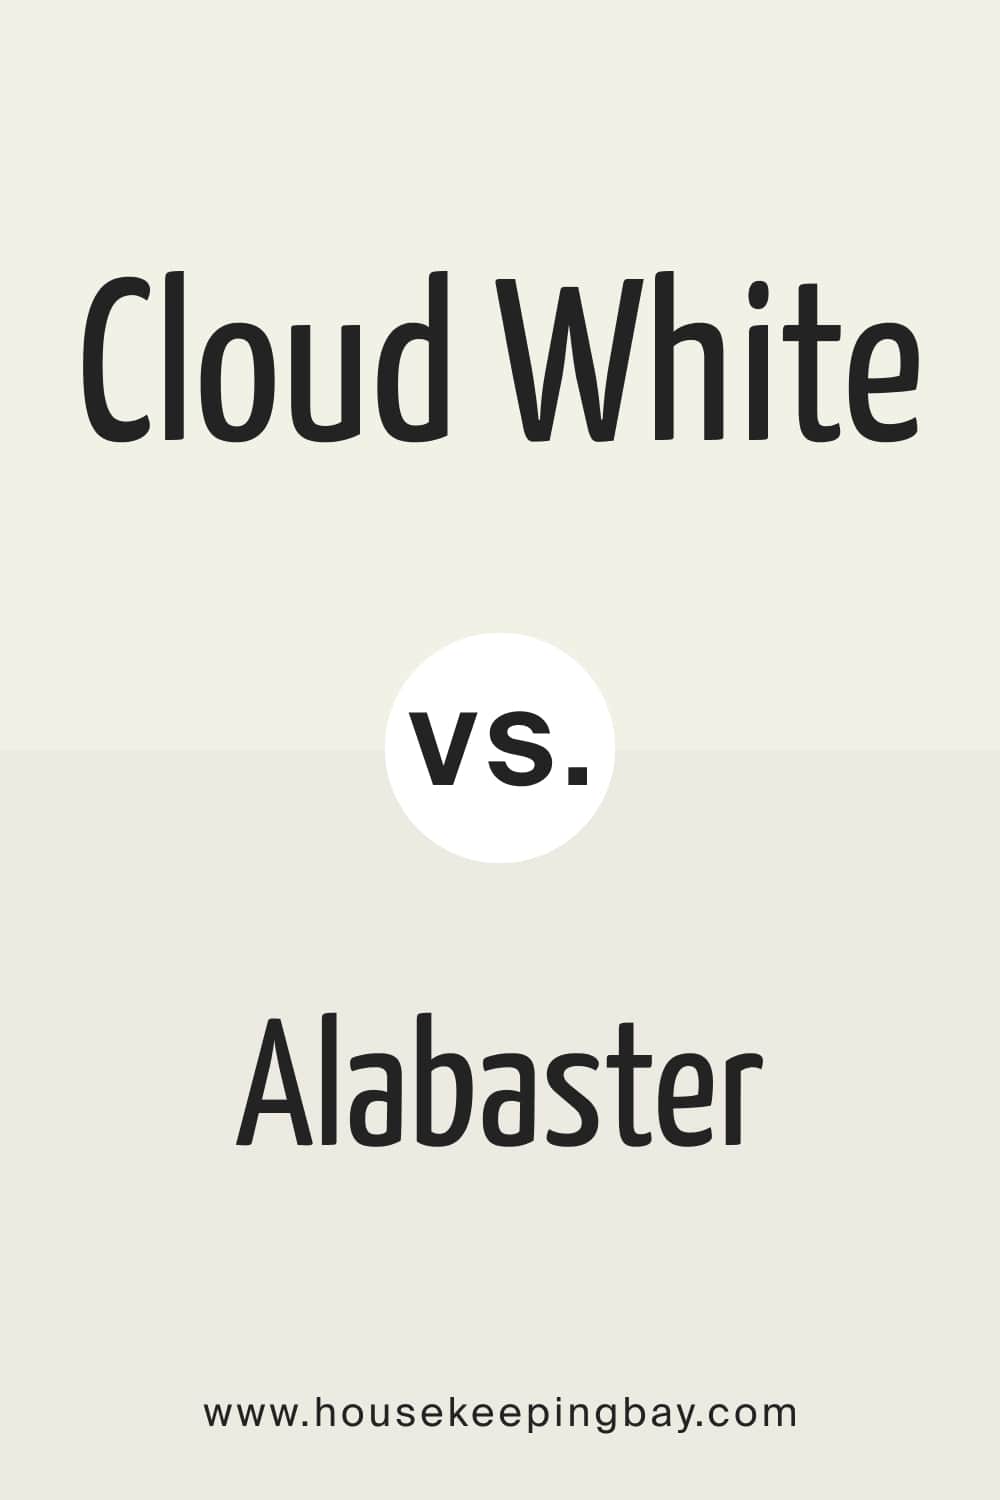 Cloud White vs. Alabaster